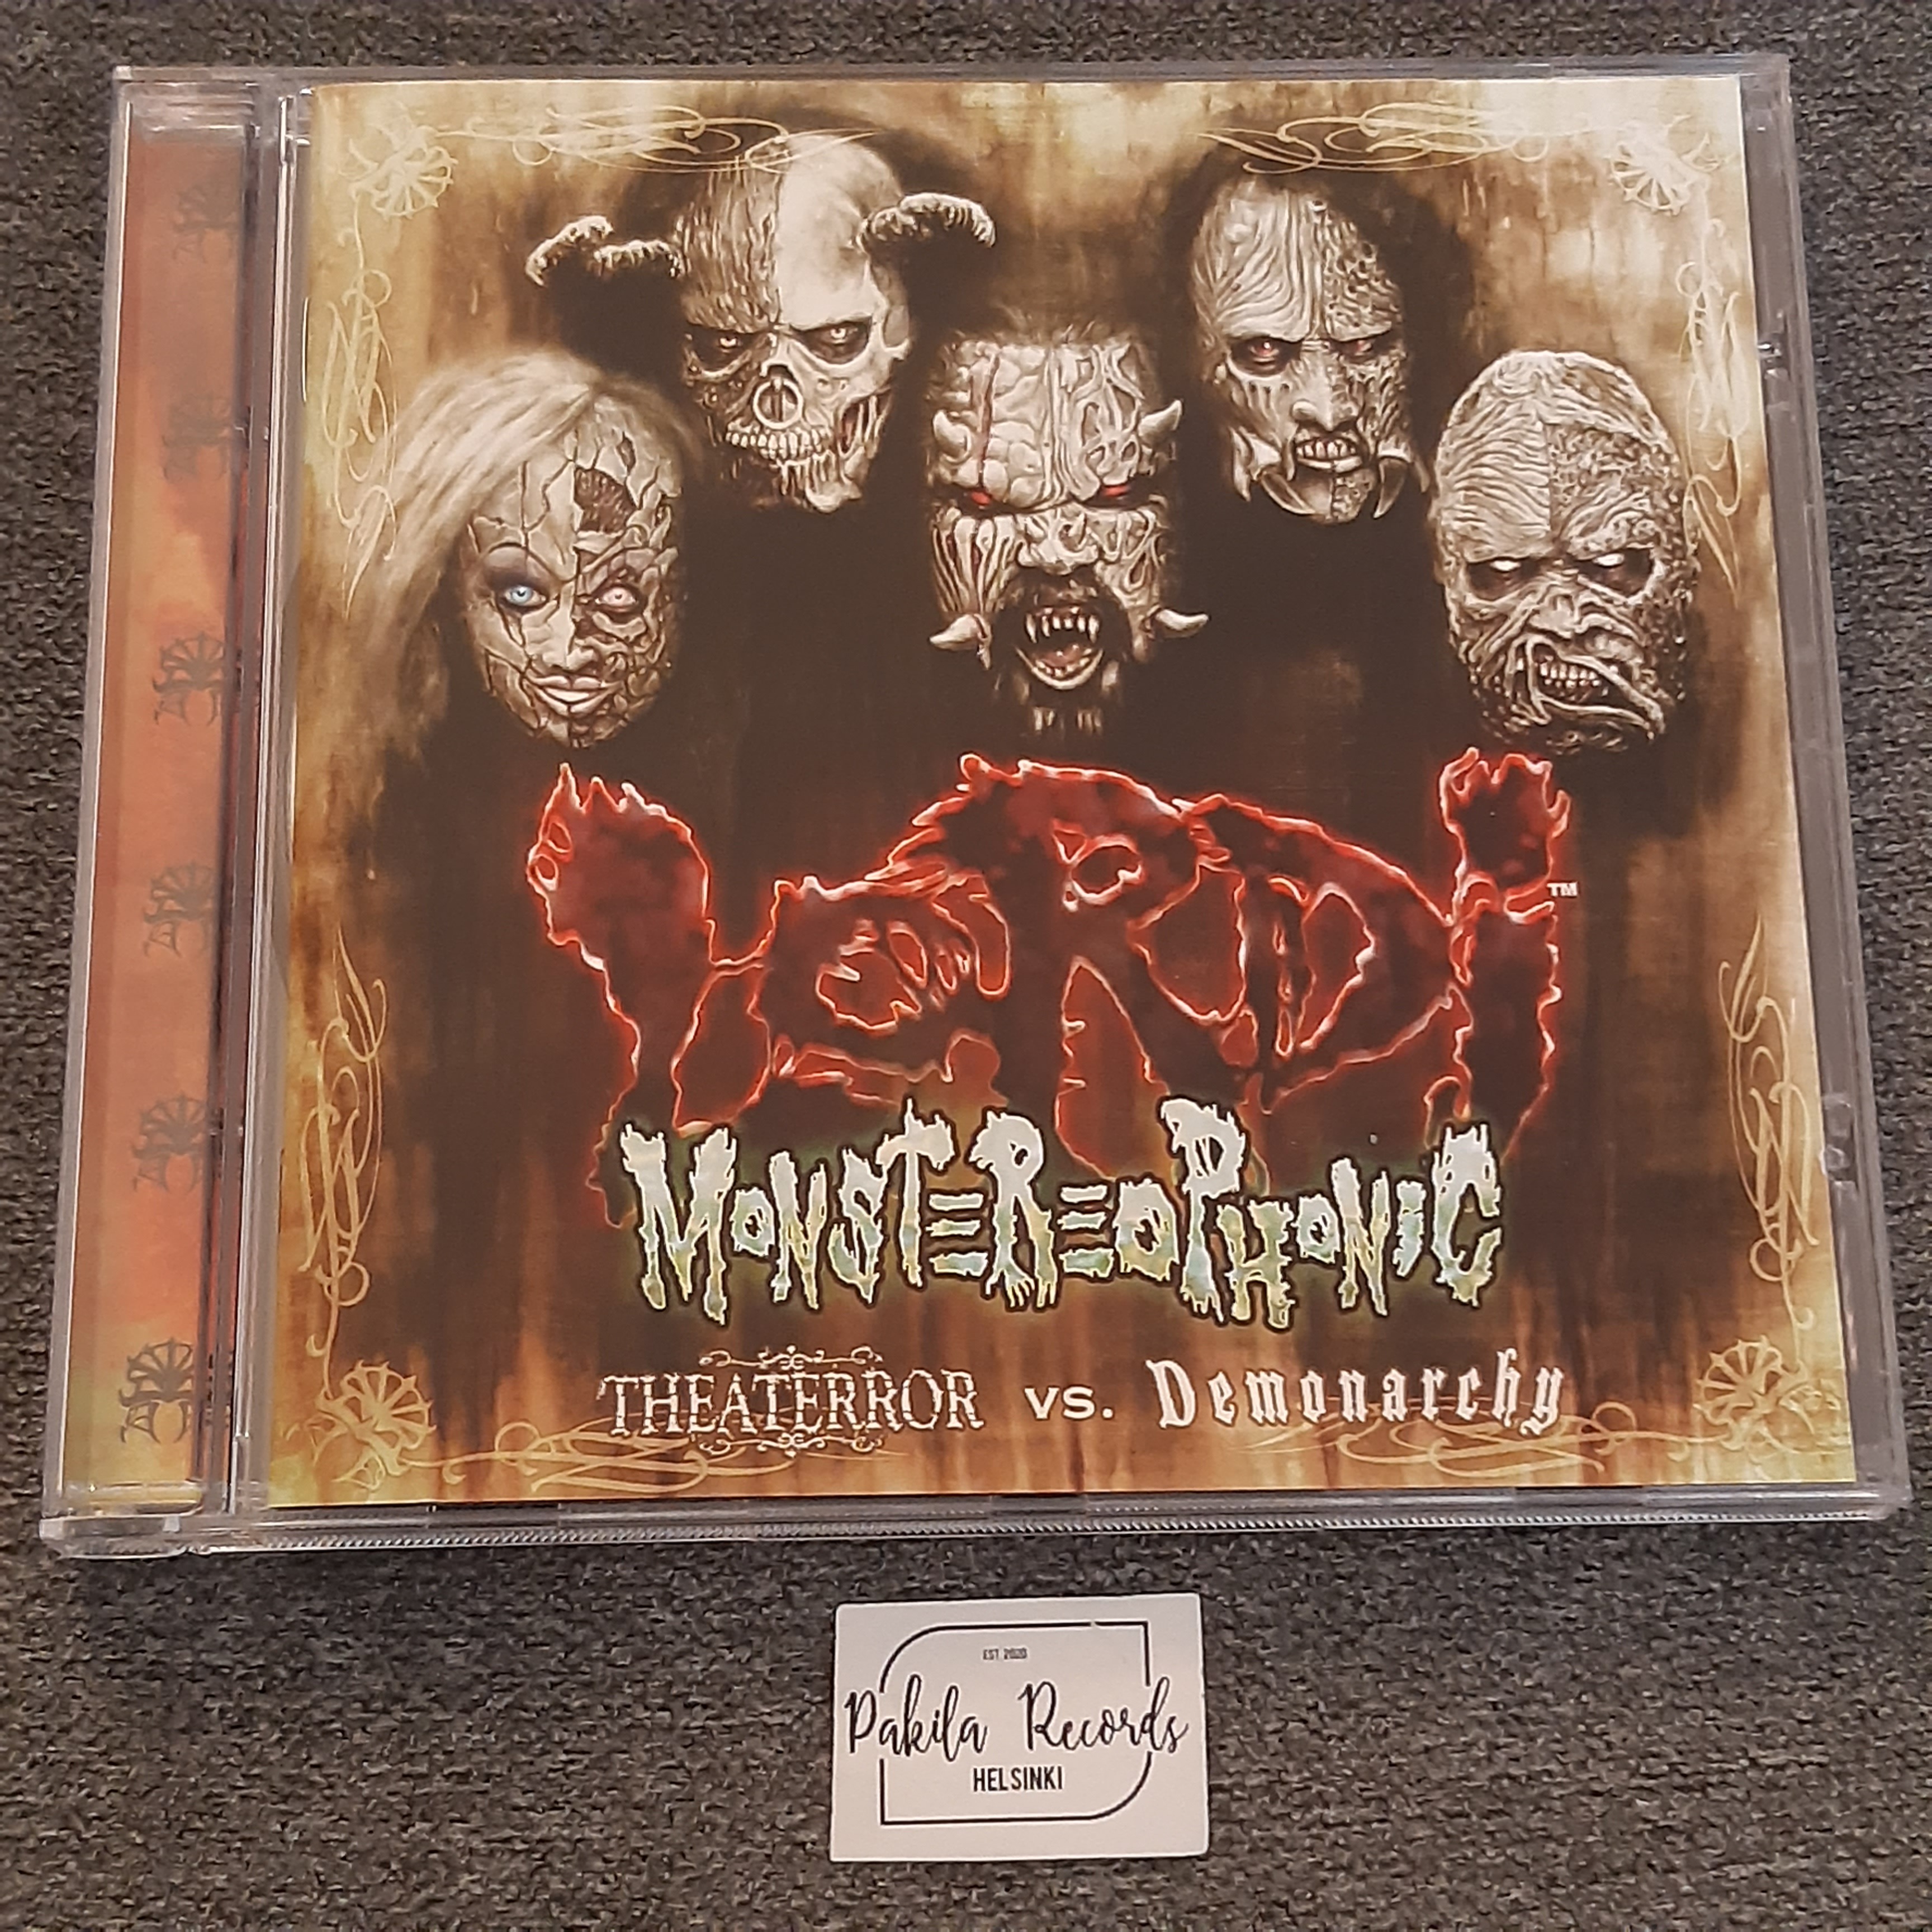 Lordi - Monstereophonic (Theaterror Vs. Demonarchy) - CD (käytetty)